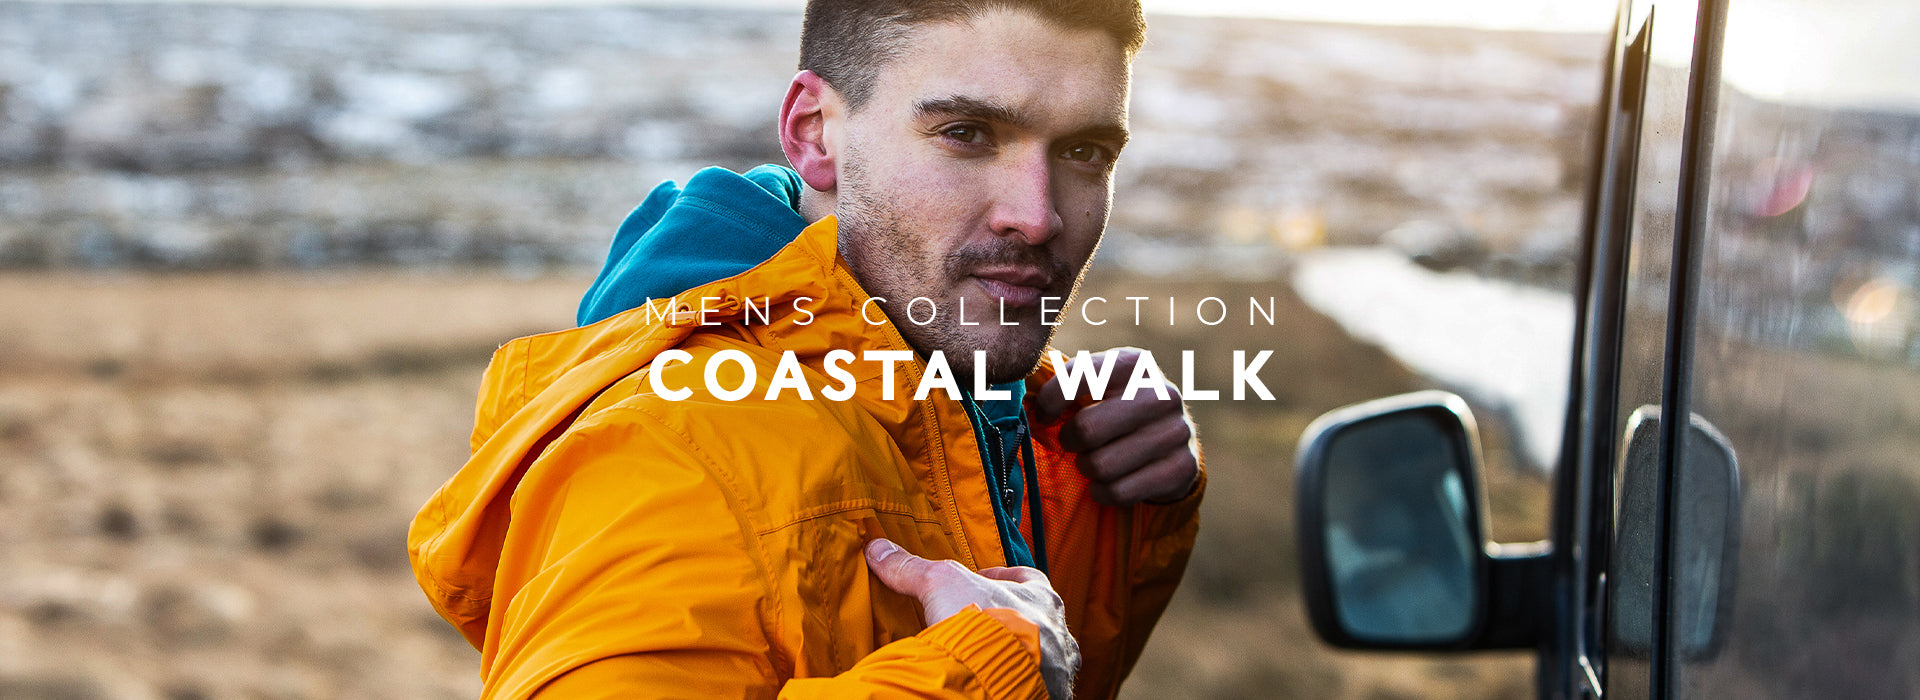 Mens coastal walk collection